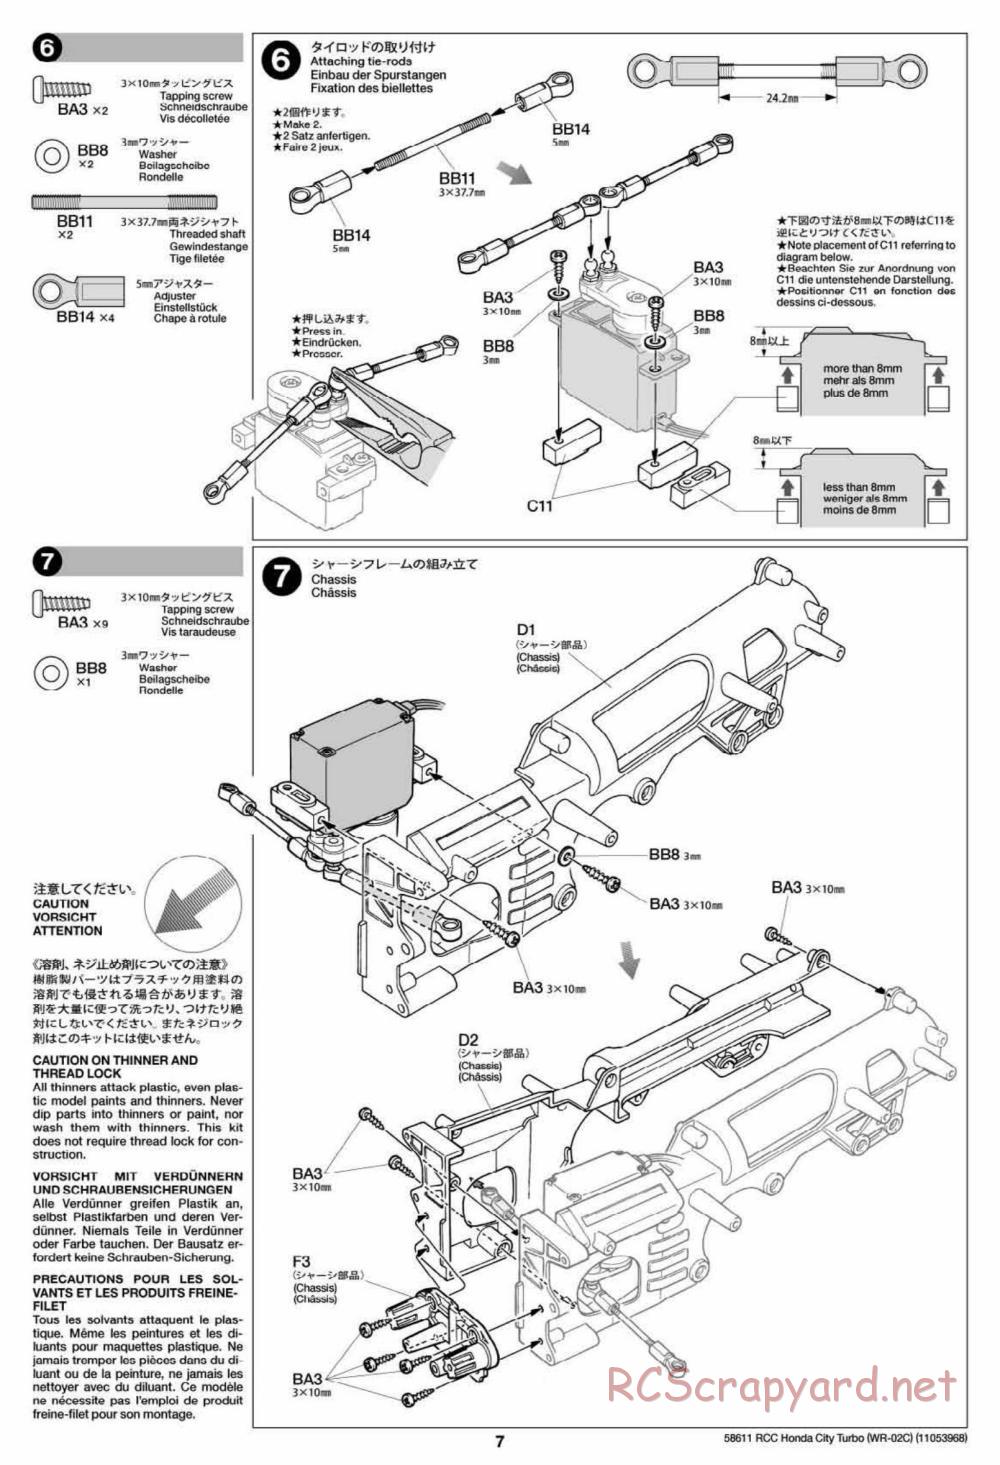 Tamiya - WR-02C Chassis - Manual - Page 7